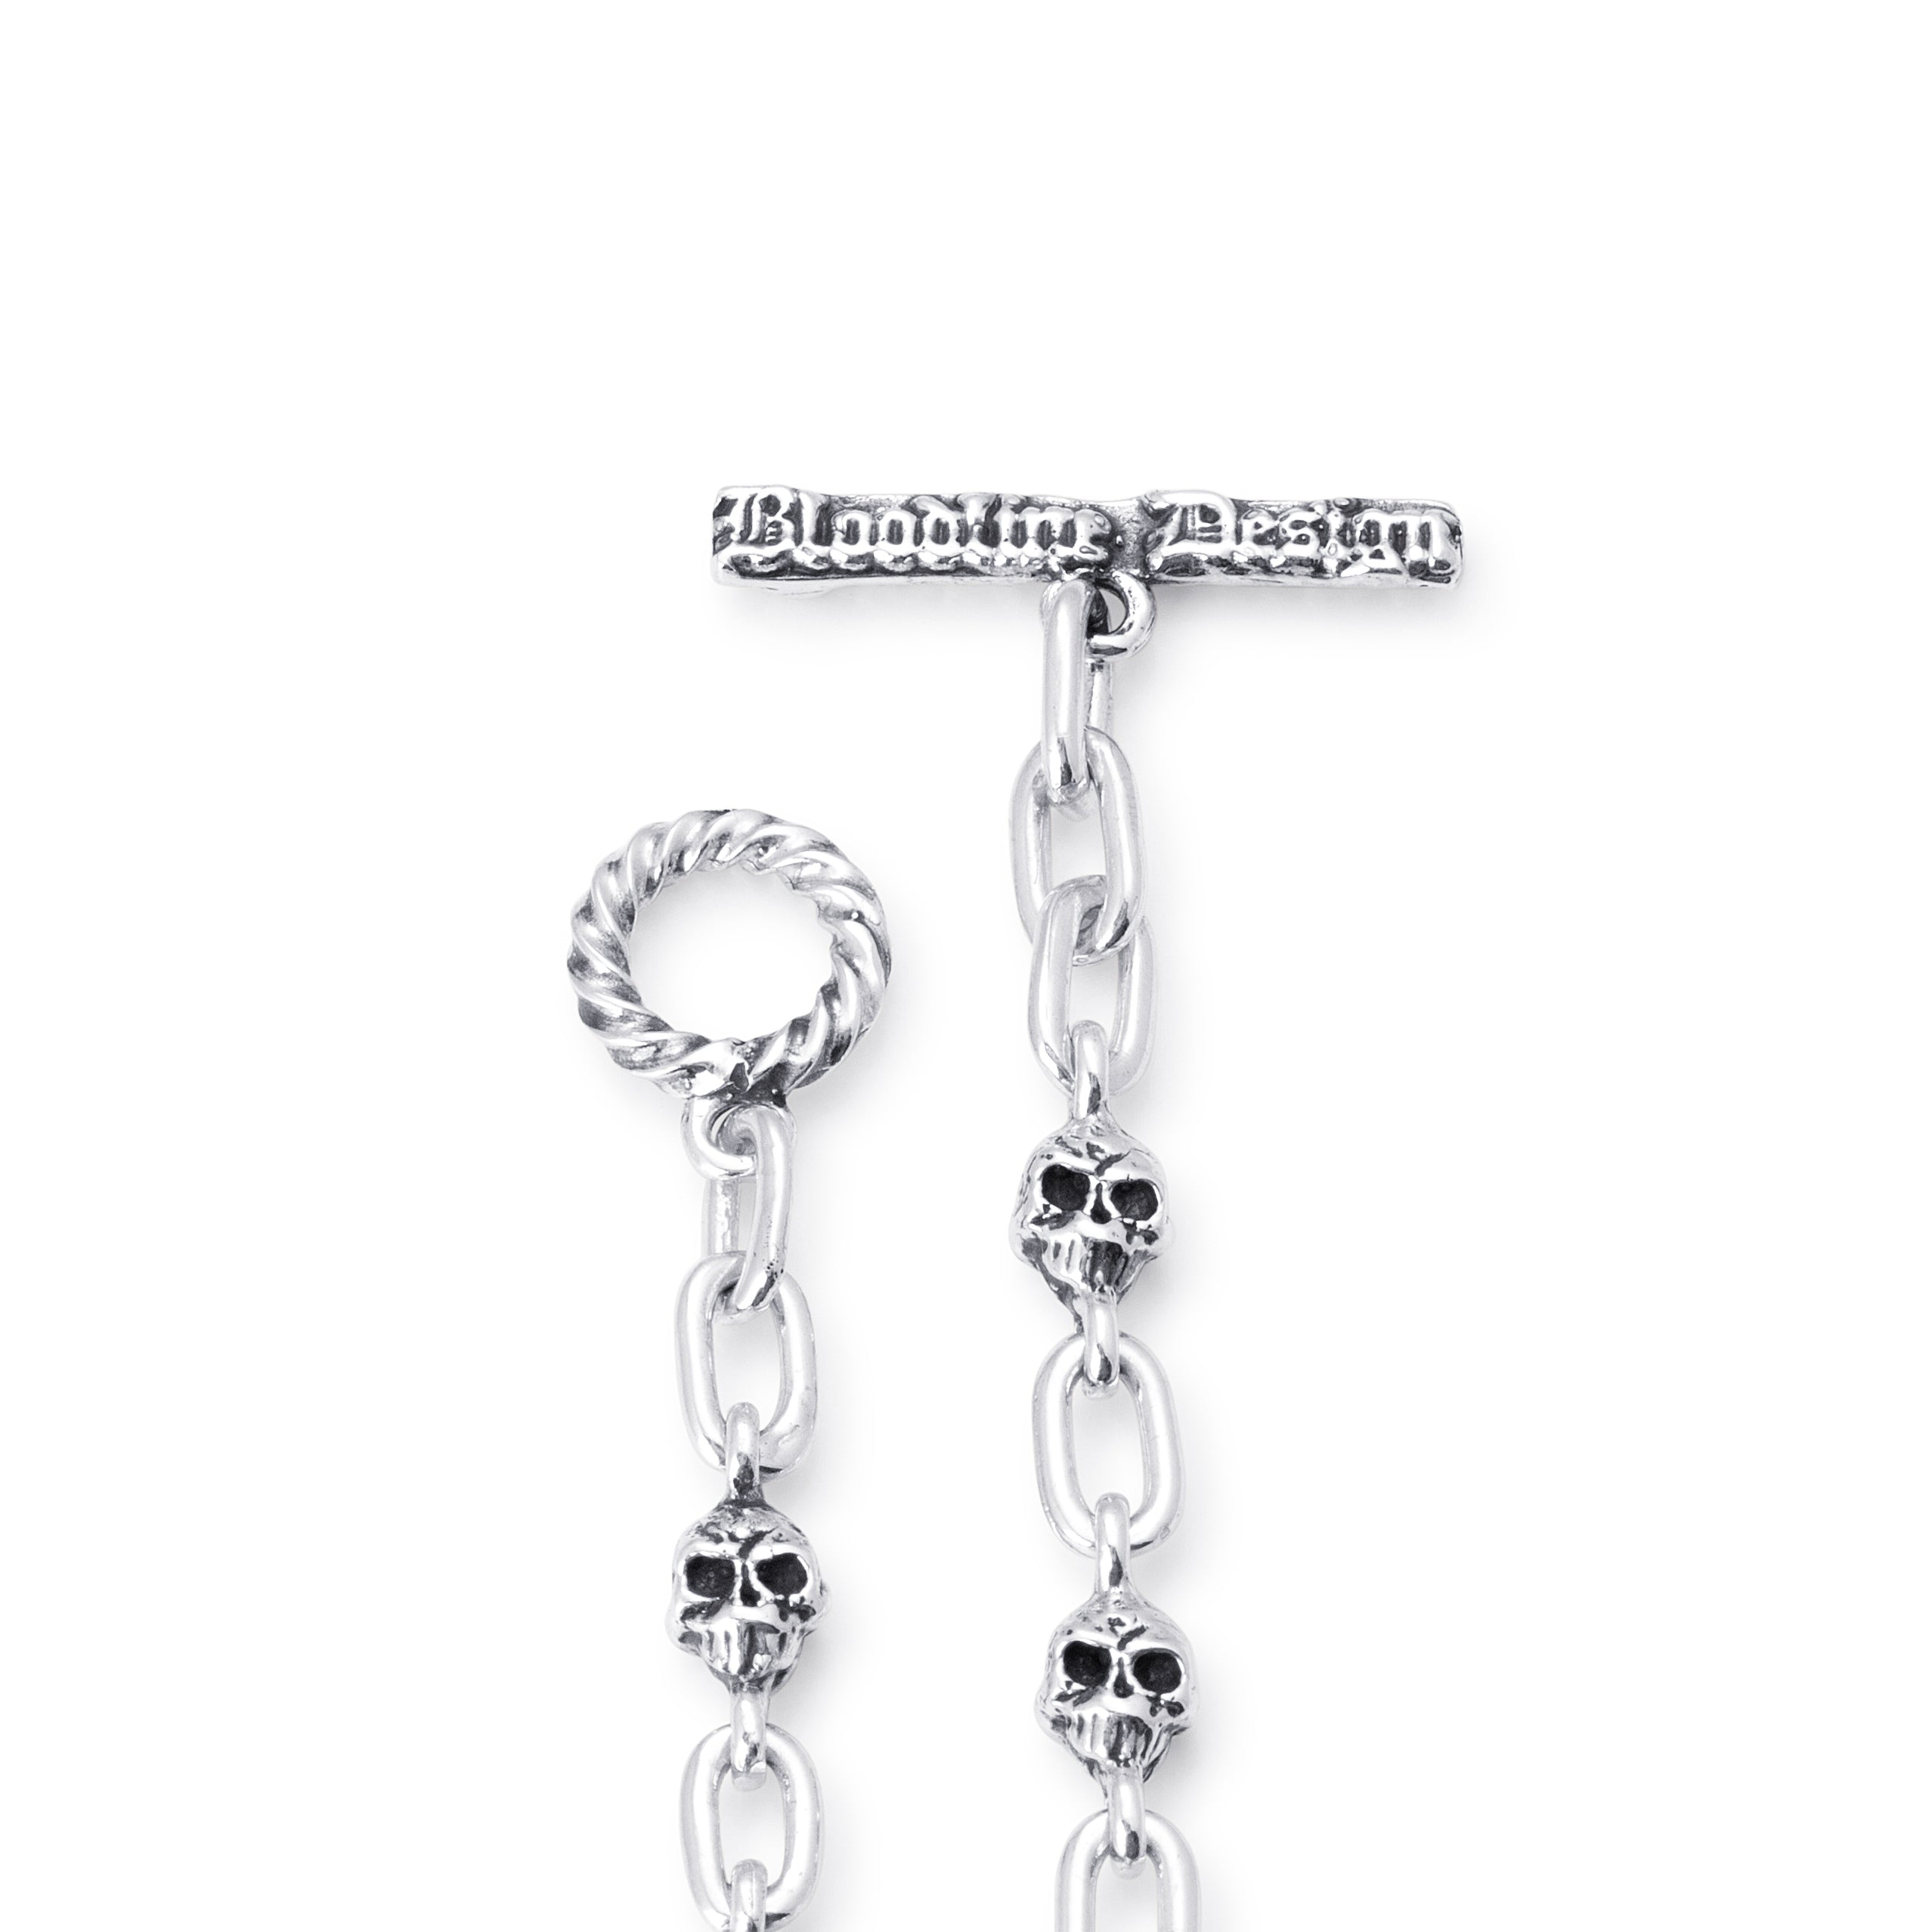 Small Skull Link Chain Bracelet in Sterling Silver, 5mm